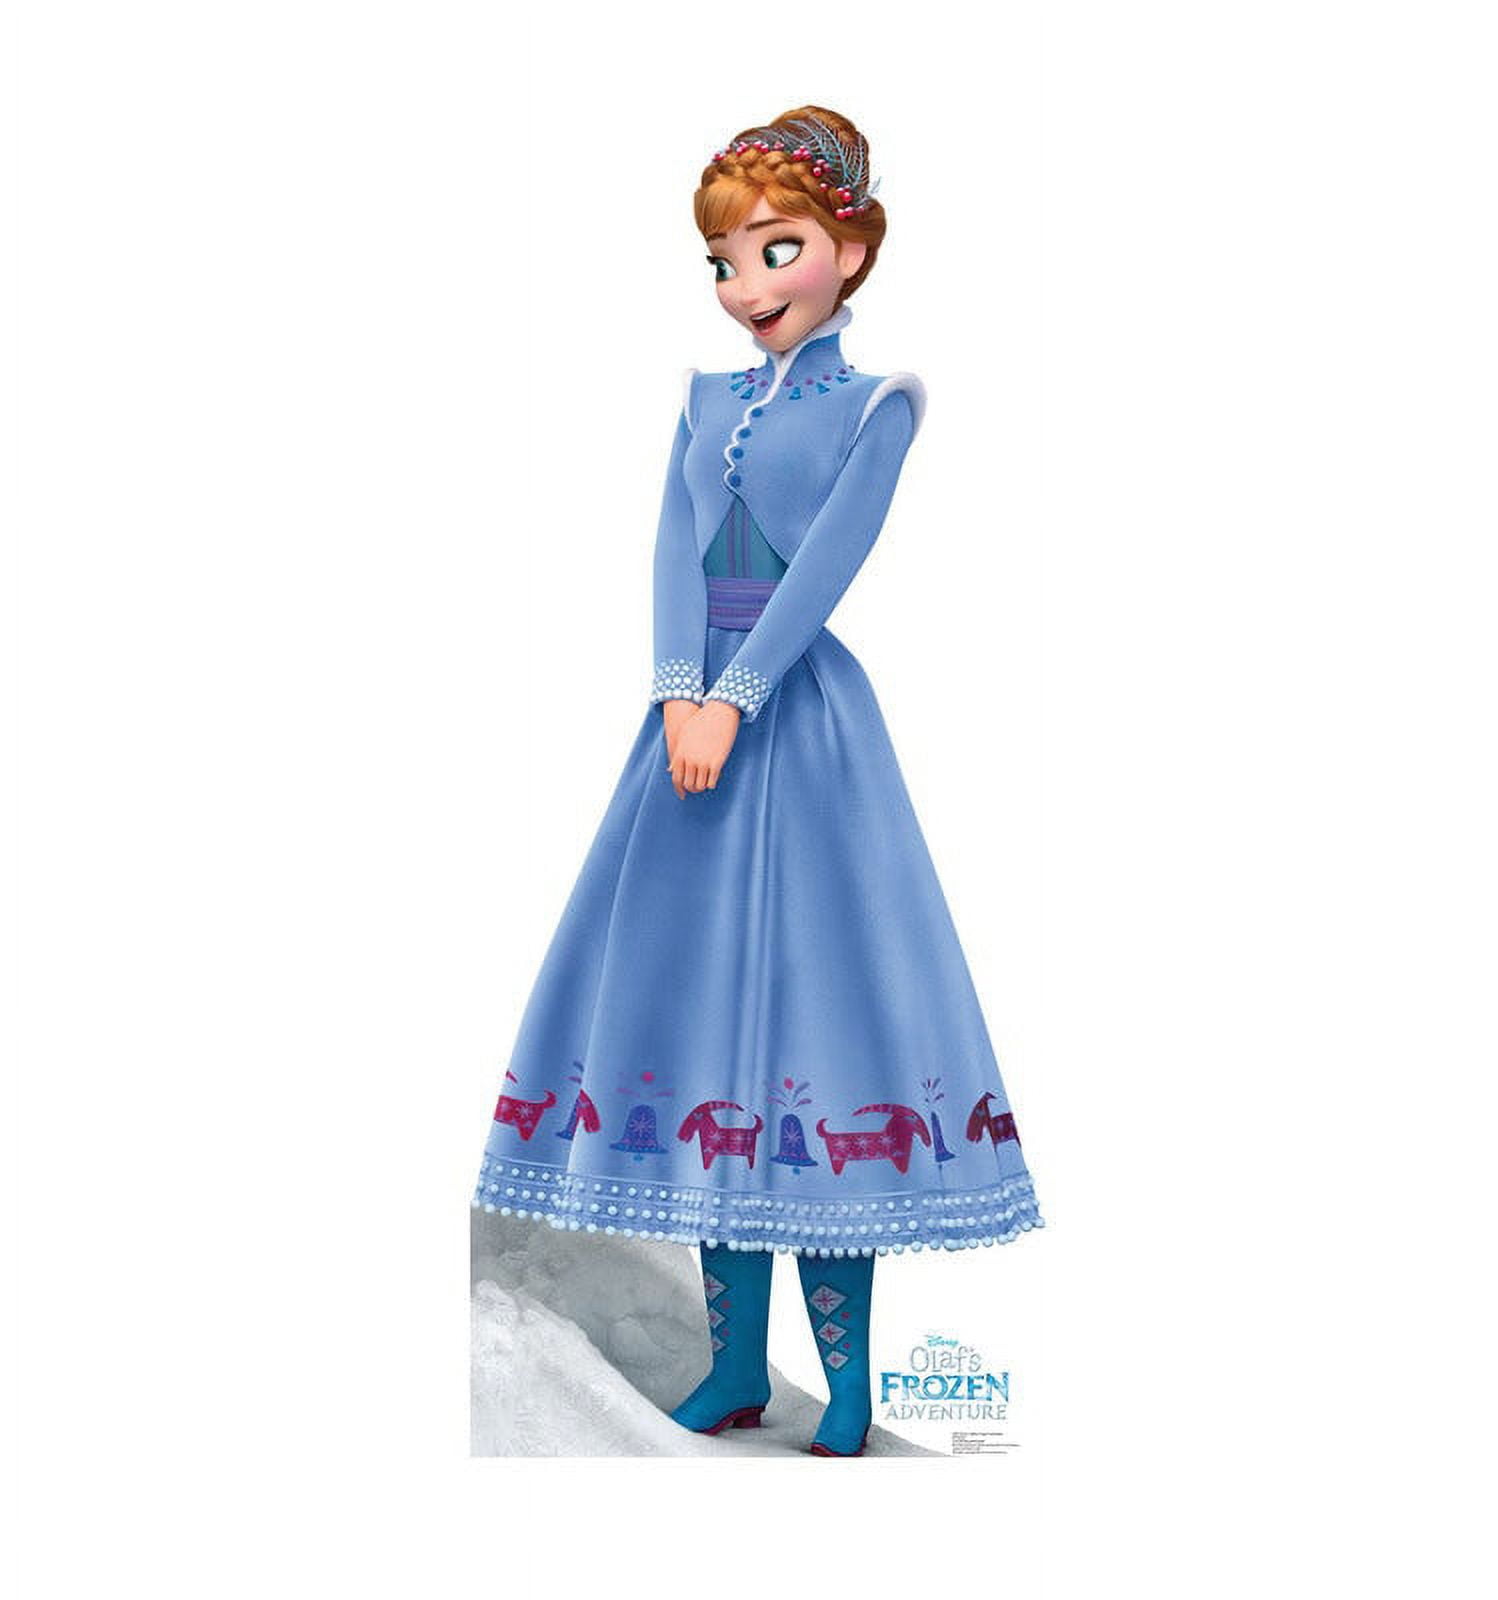 2587 68 X 29 In. Anna - Disneys Olafs Frozen Adventure